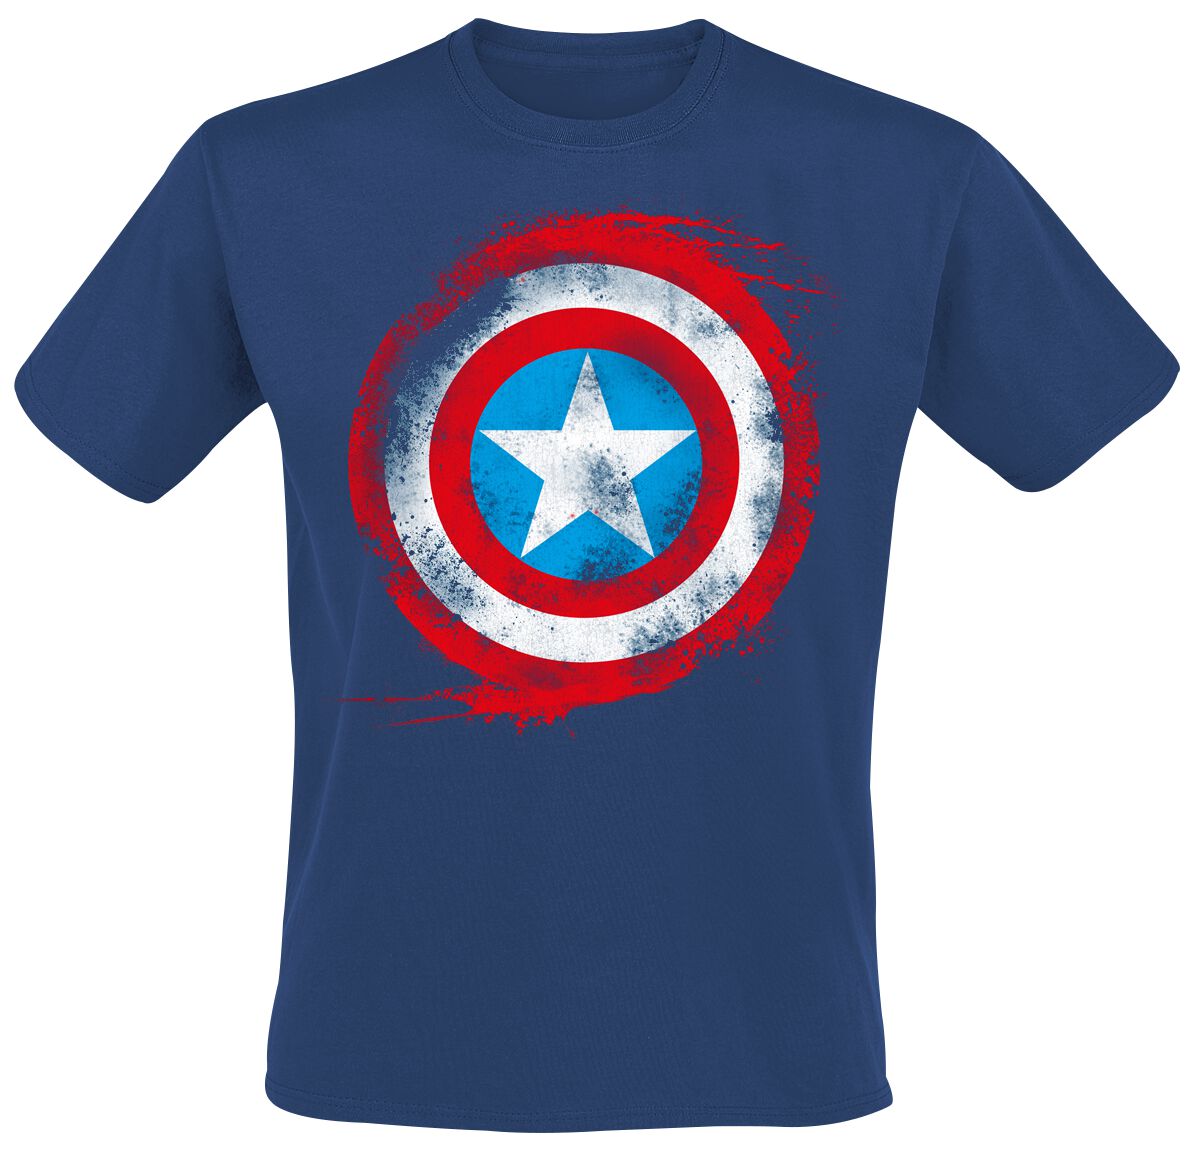 T shield. Капитан бренд. Marvel logo Futbolka. Perry Ellis t Shirt. Captain America logo.